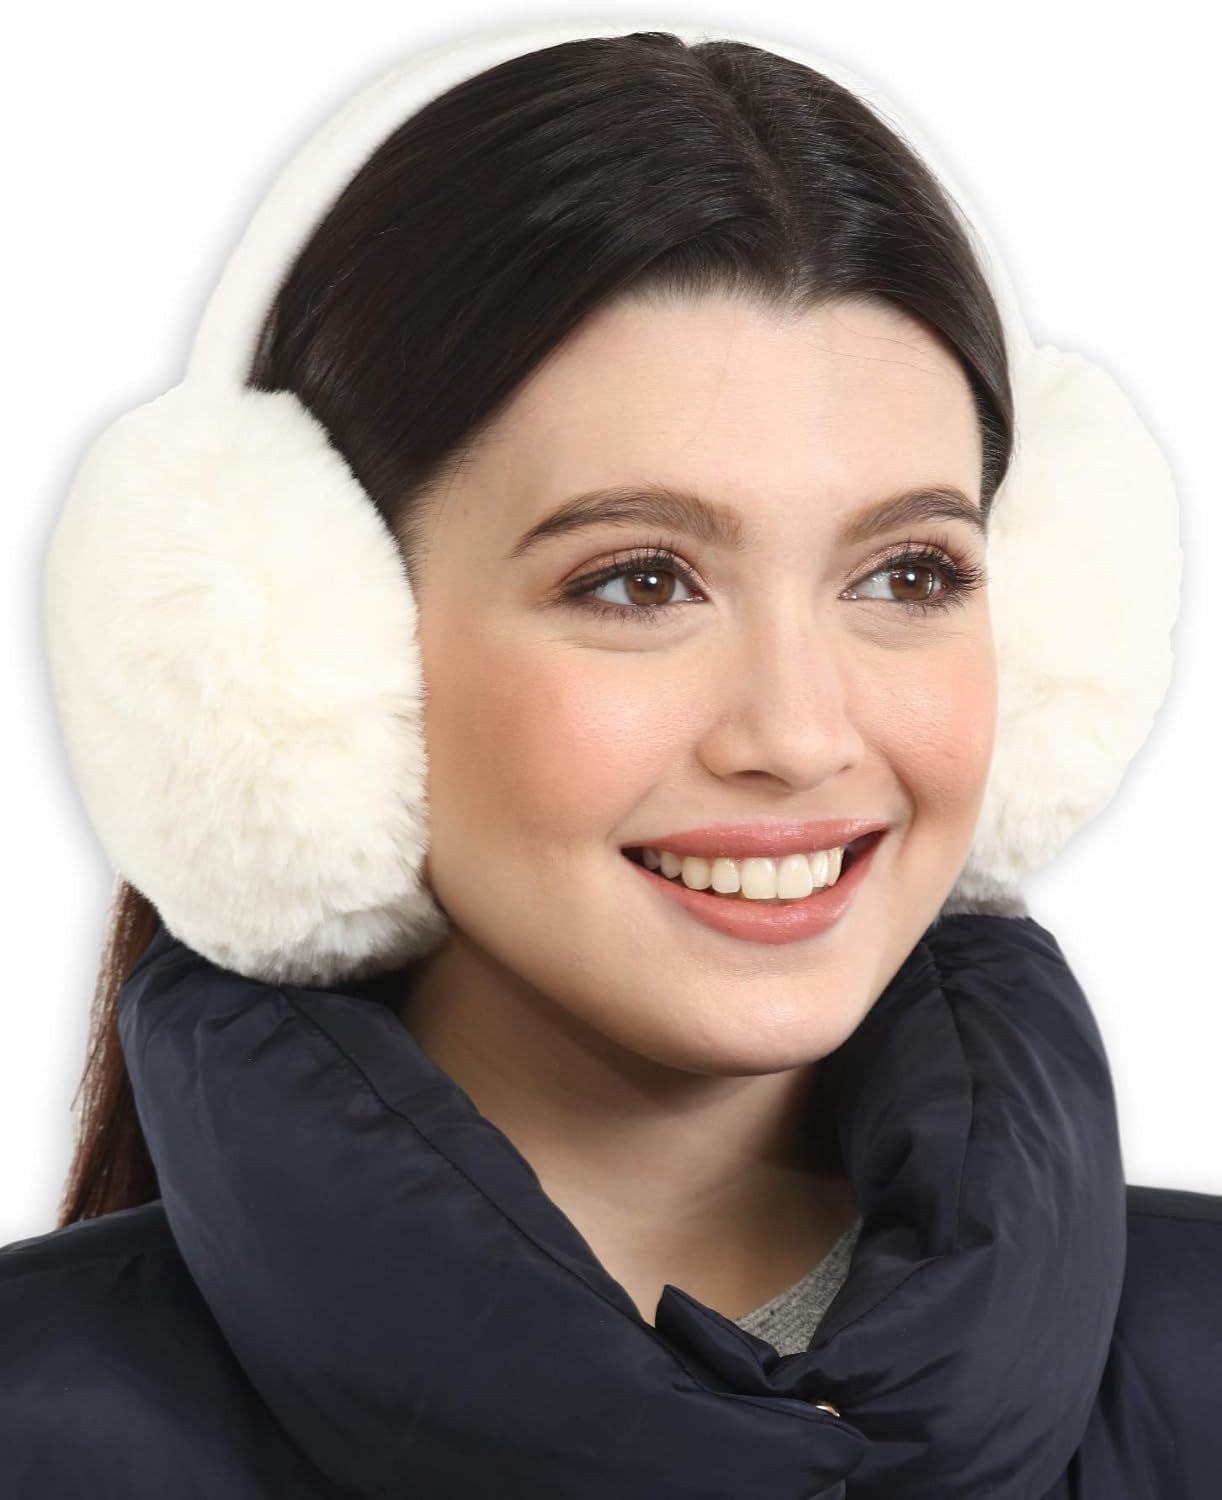 Opspring Ohrenwärmer Ohrenschützer,Winter-Ohrenwärmer,Ohrenschützer für kaltes Wetter